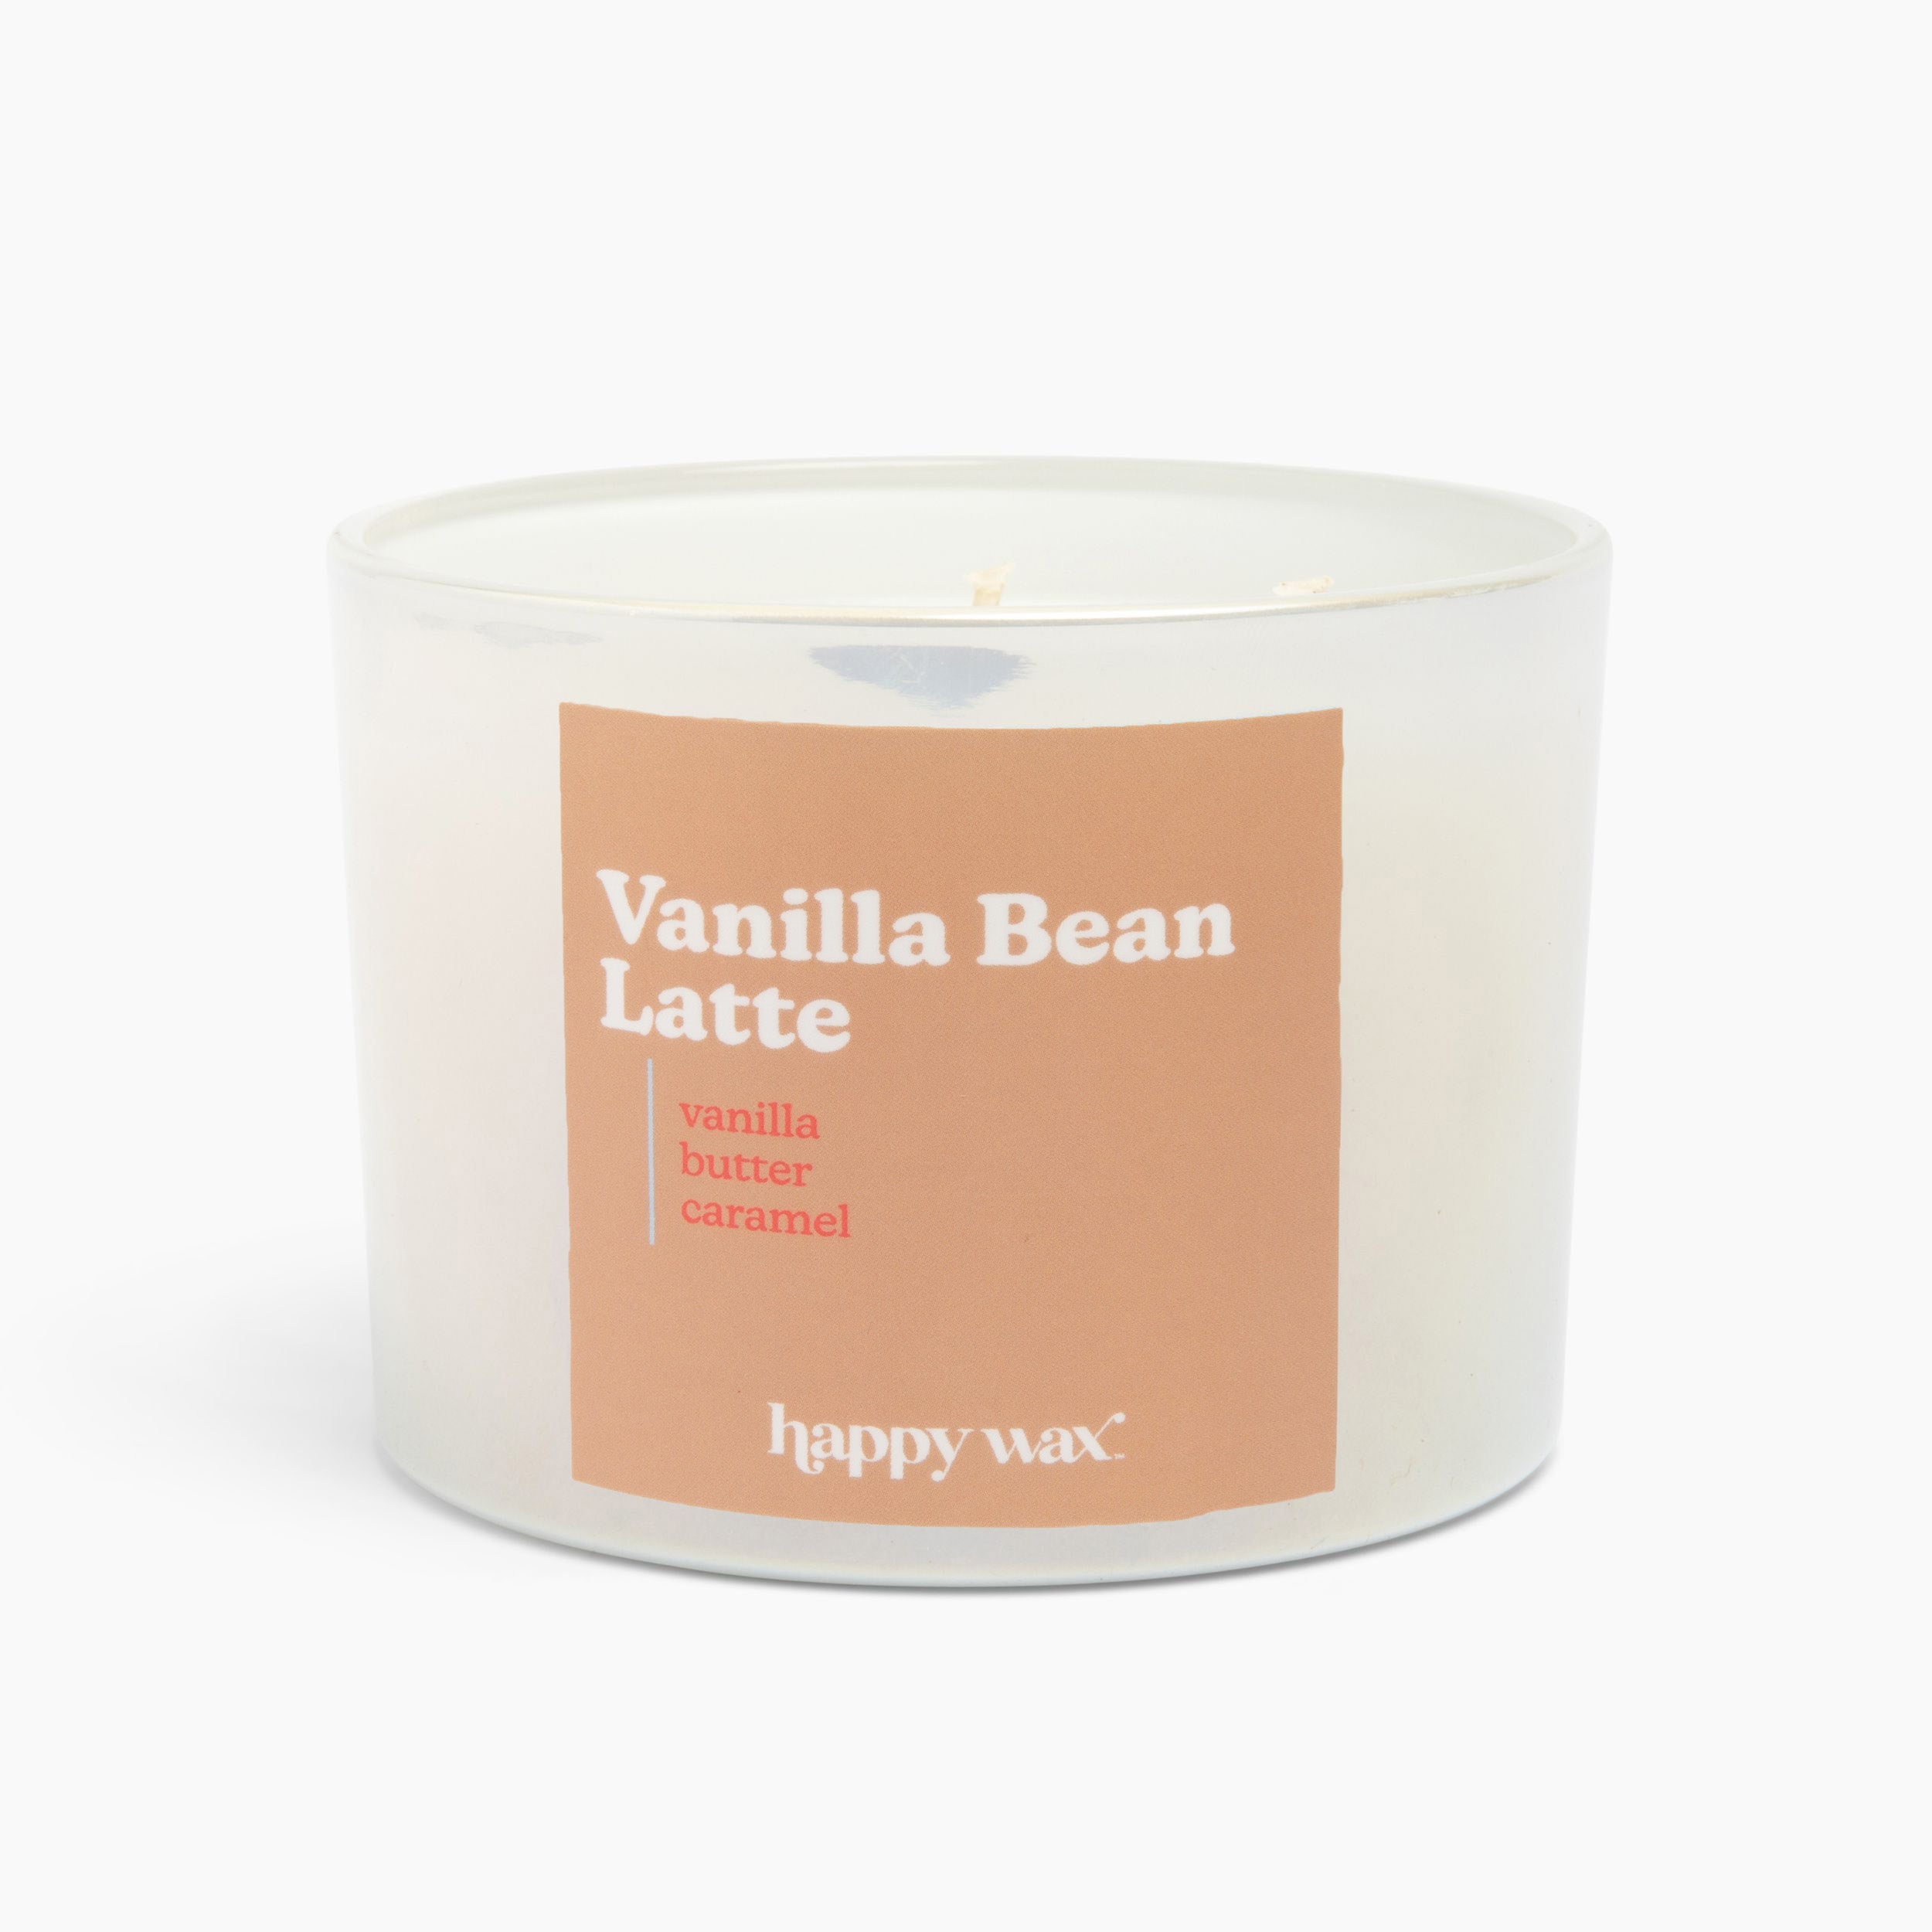 Vanilla Latte Fragrance Oil  For Diffuser Burner, Candle, Wax